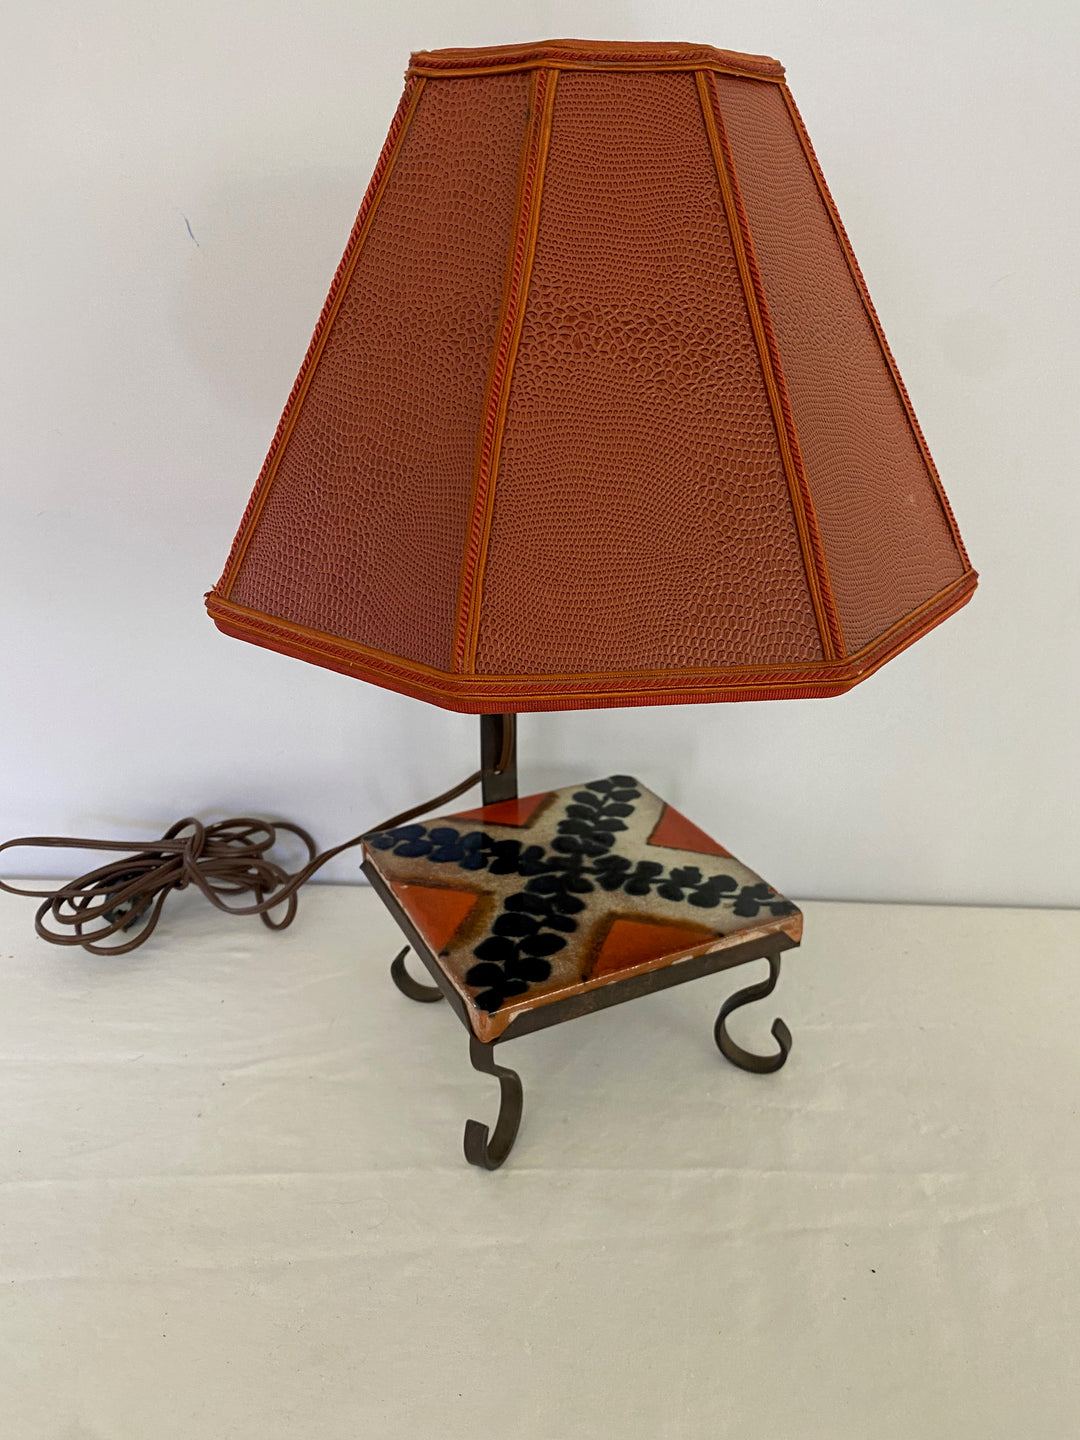 Tudor Tile Lamp